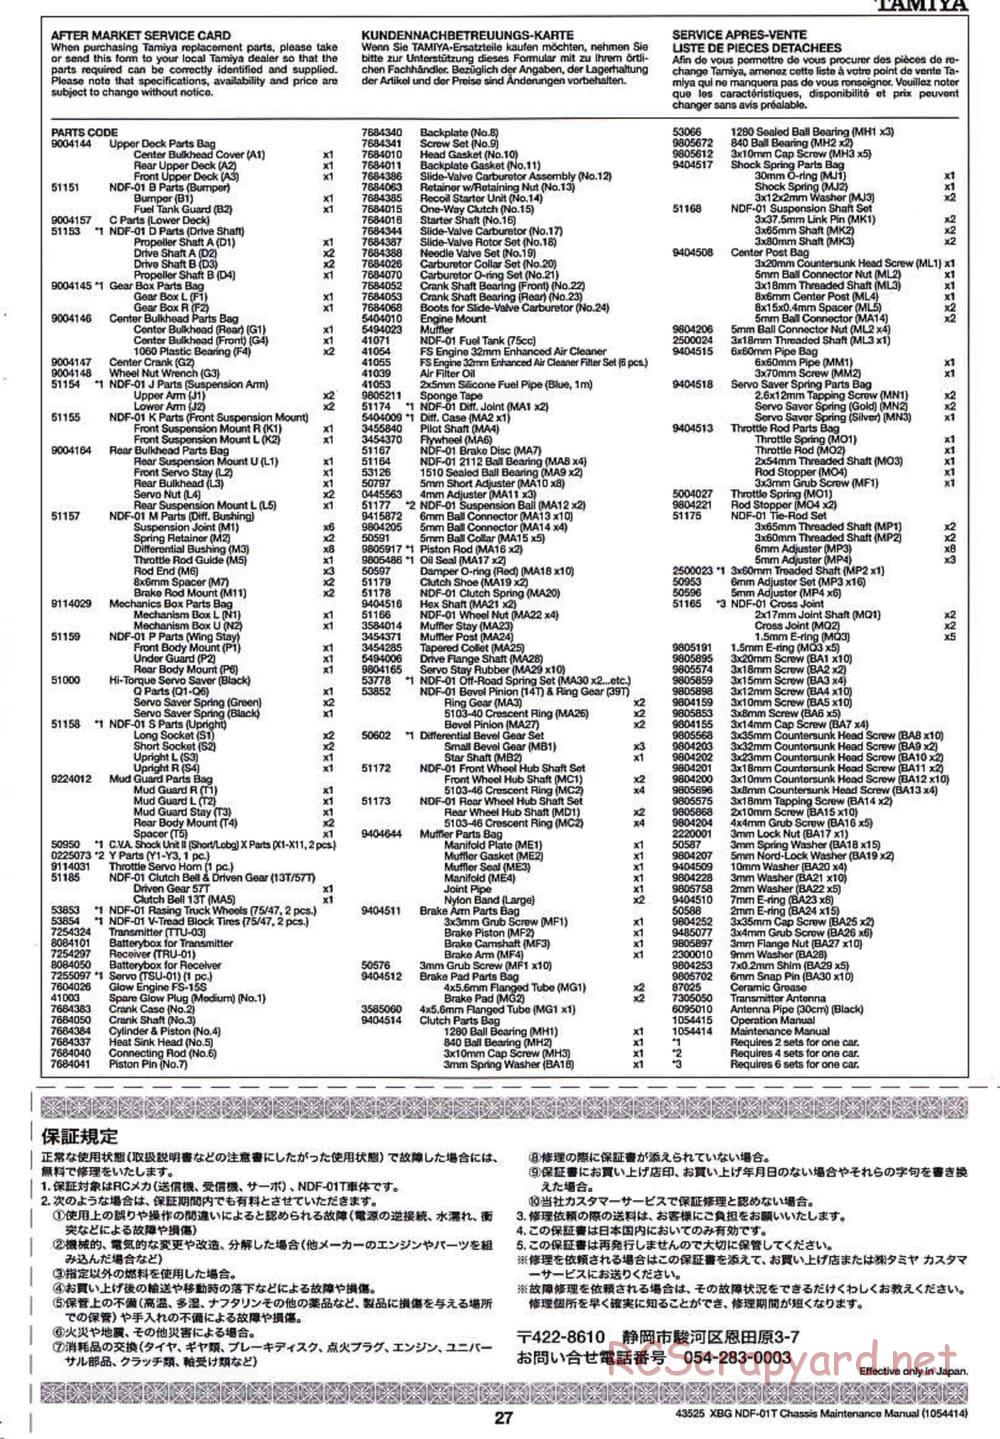 Tamiya - Nitro Crusher - NDF-01T - Maintenance Manual - Page 27